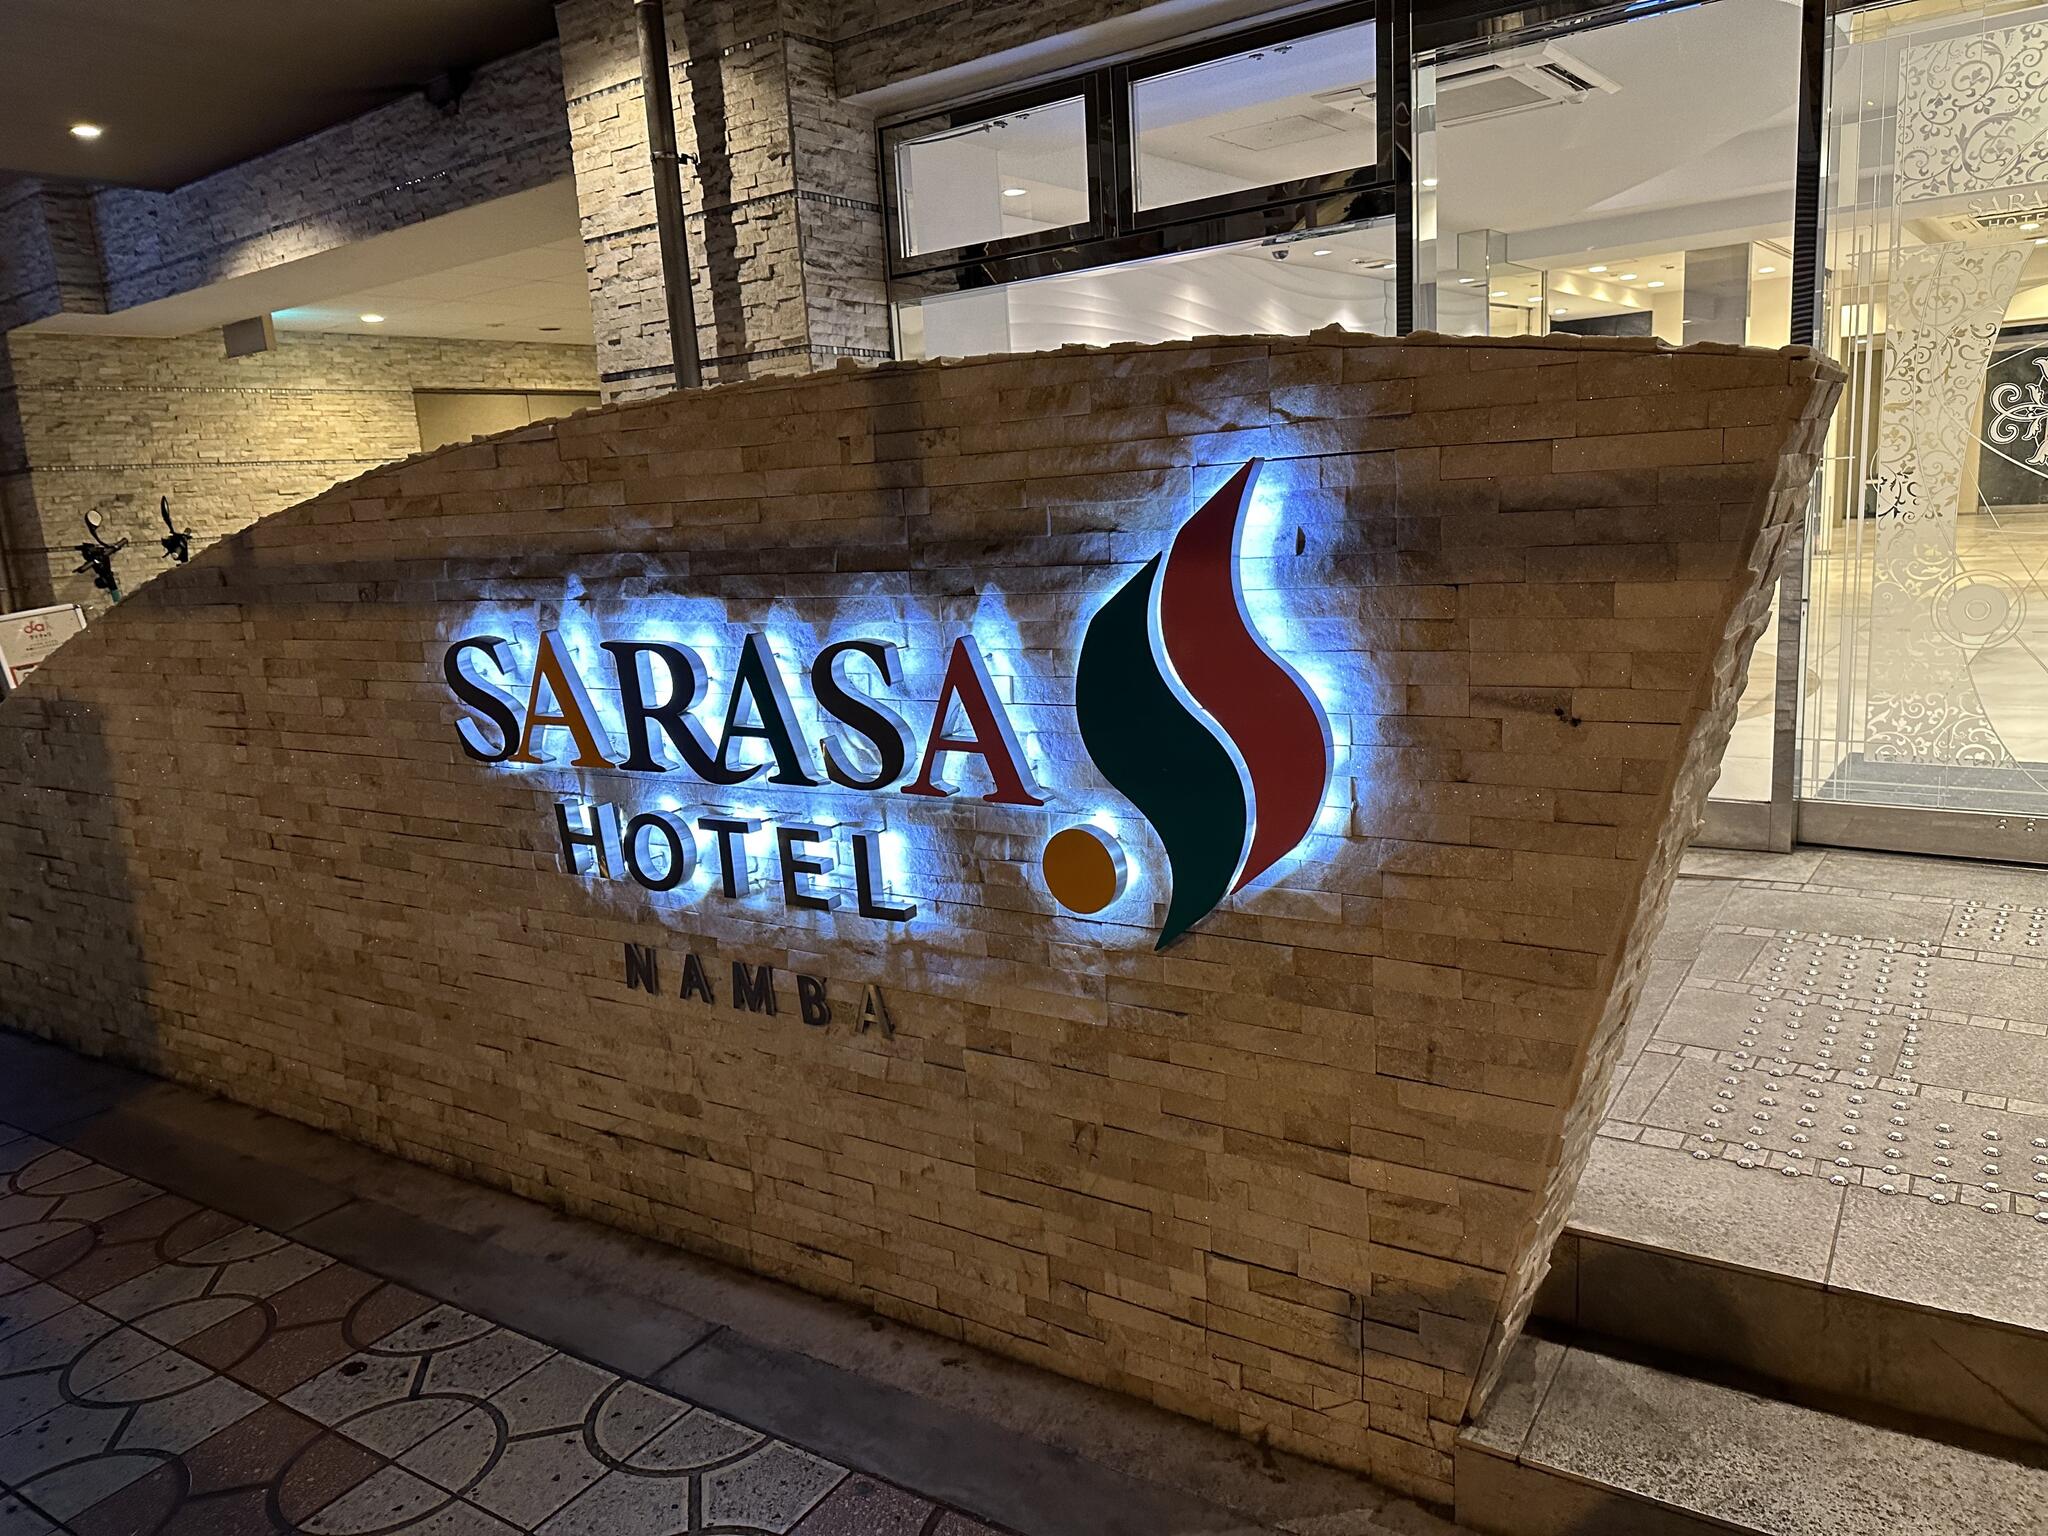 SARASA HOTEL なんばの代表写真1